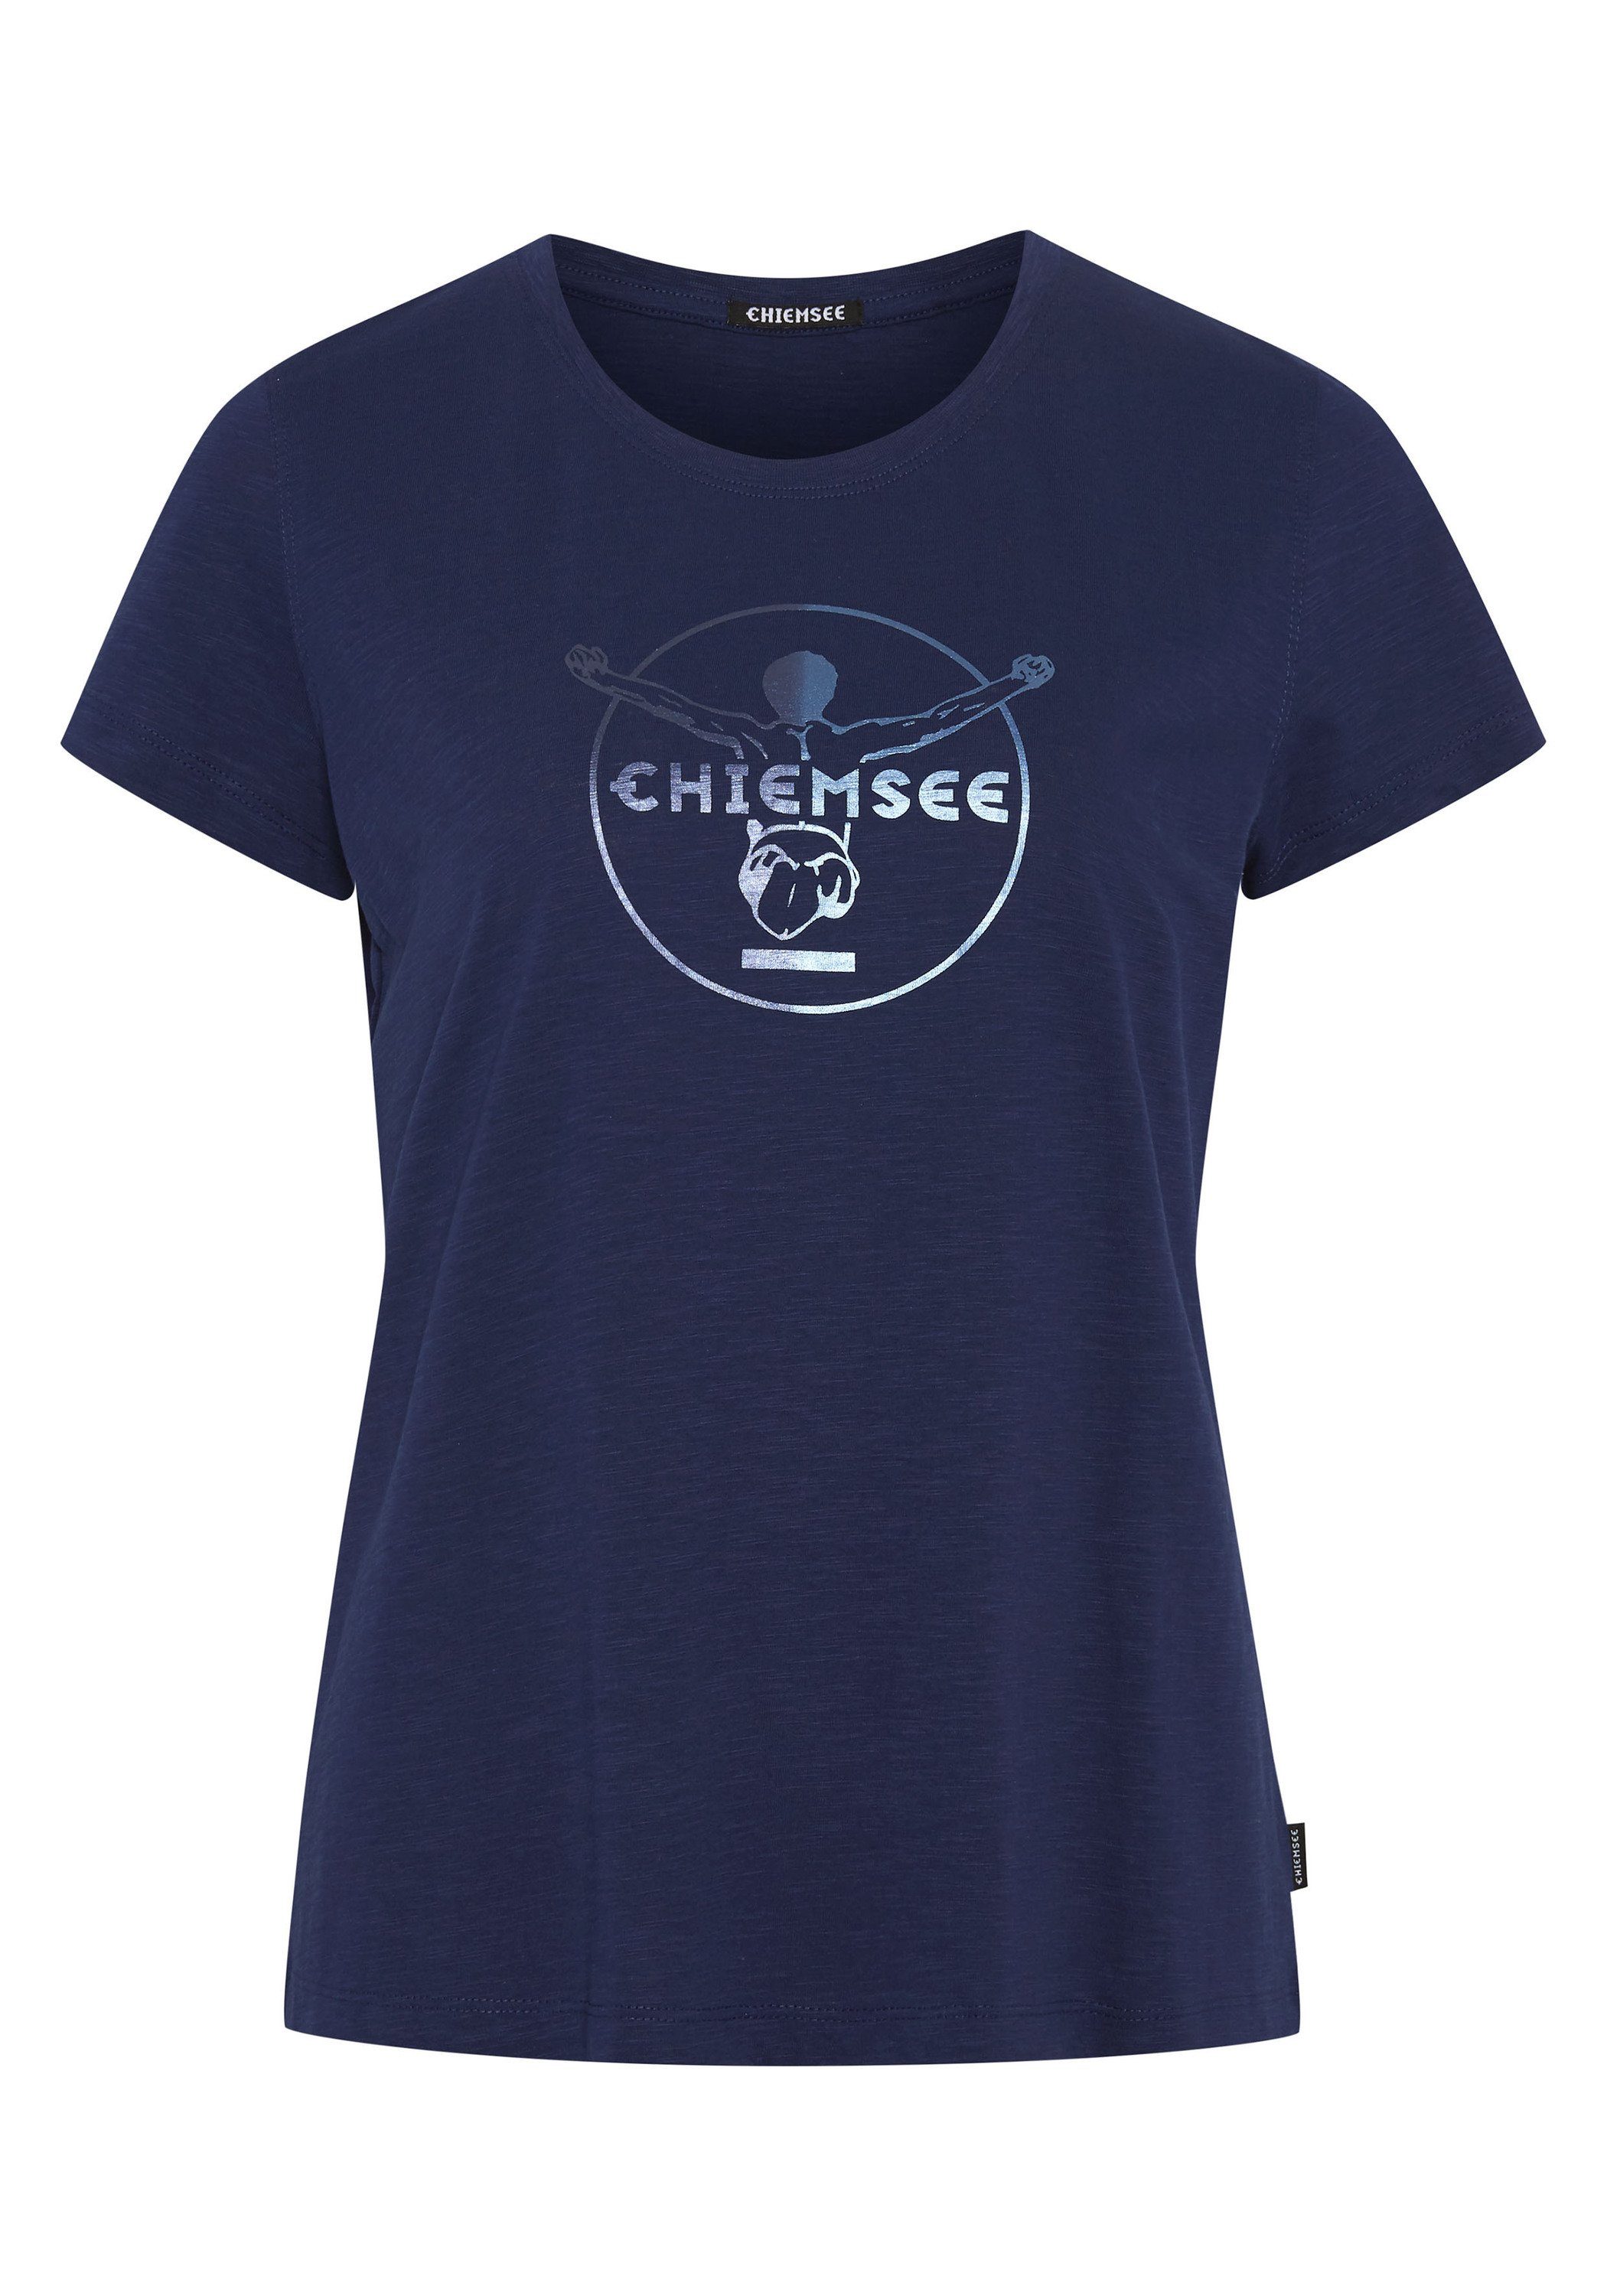 Chiemsee T-Shirt Medieval 19-3933 Blue Jumper-Frontprint 1 mit Print-Shirt